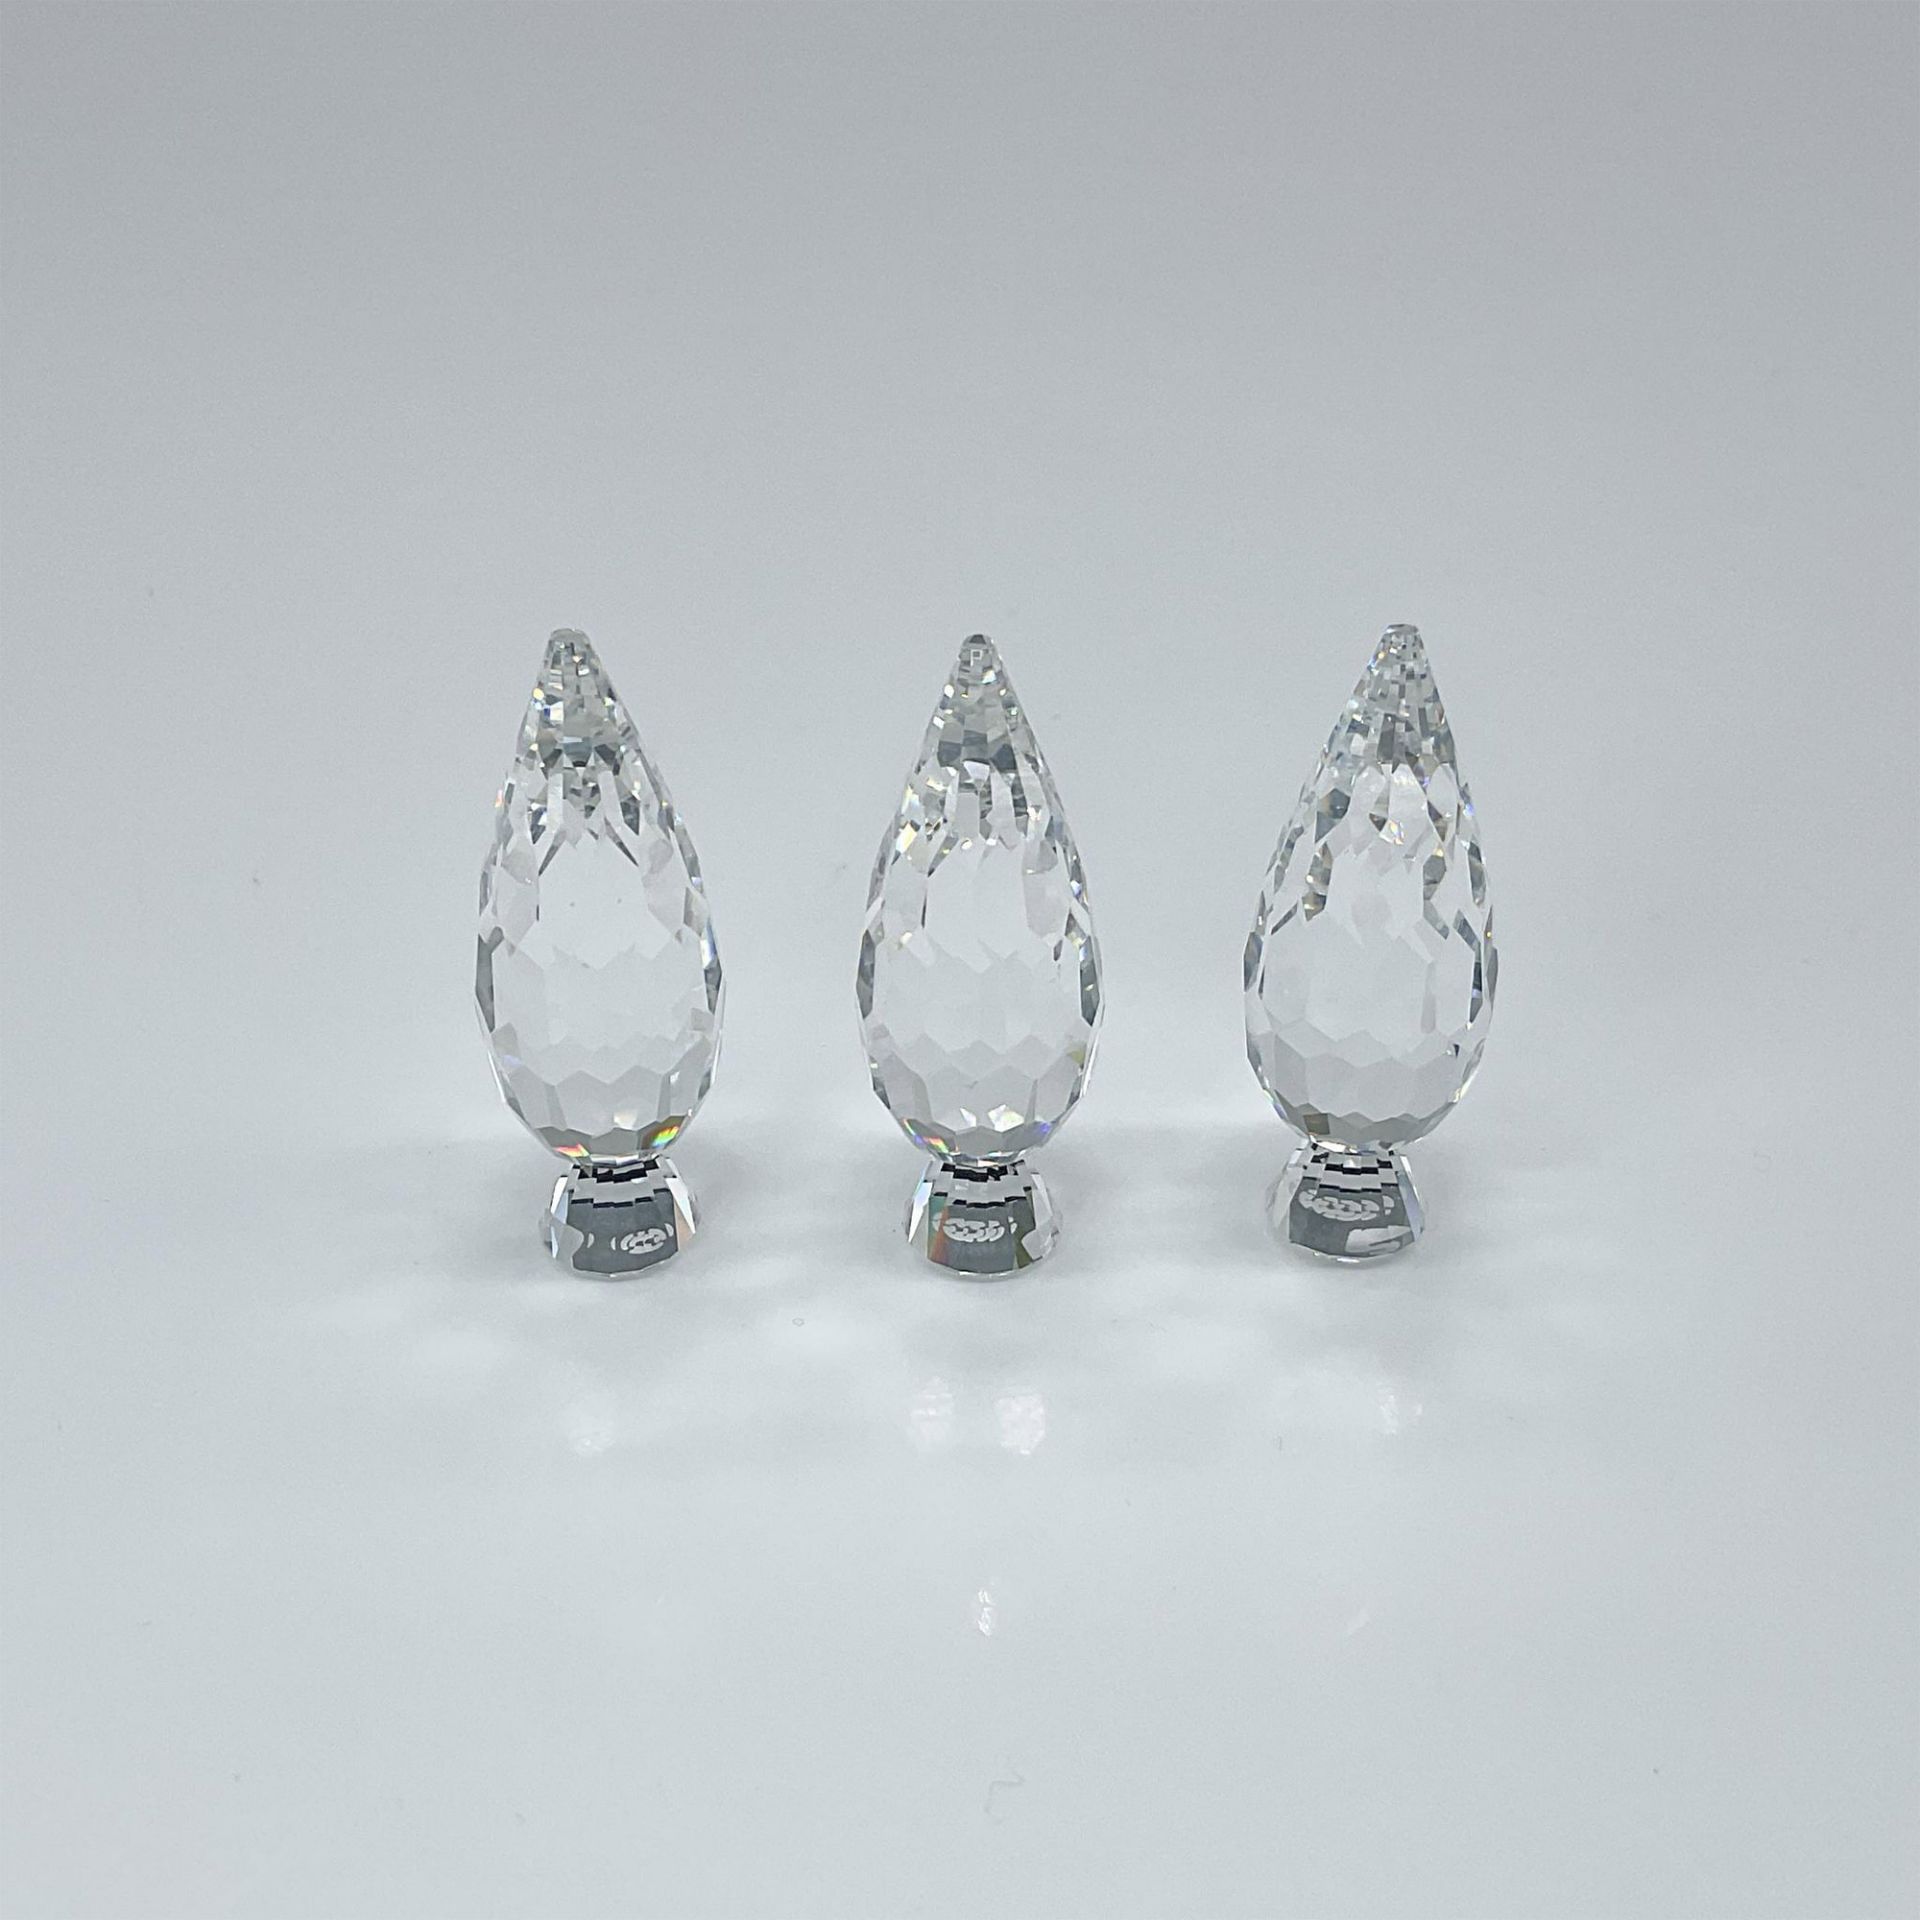 3pc Swarovski Silver Crystal Figurines, Poplar Trees - Image 2 of 3